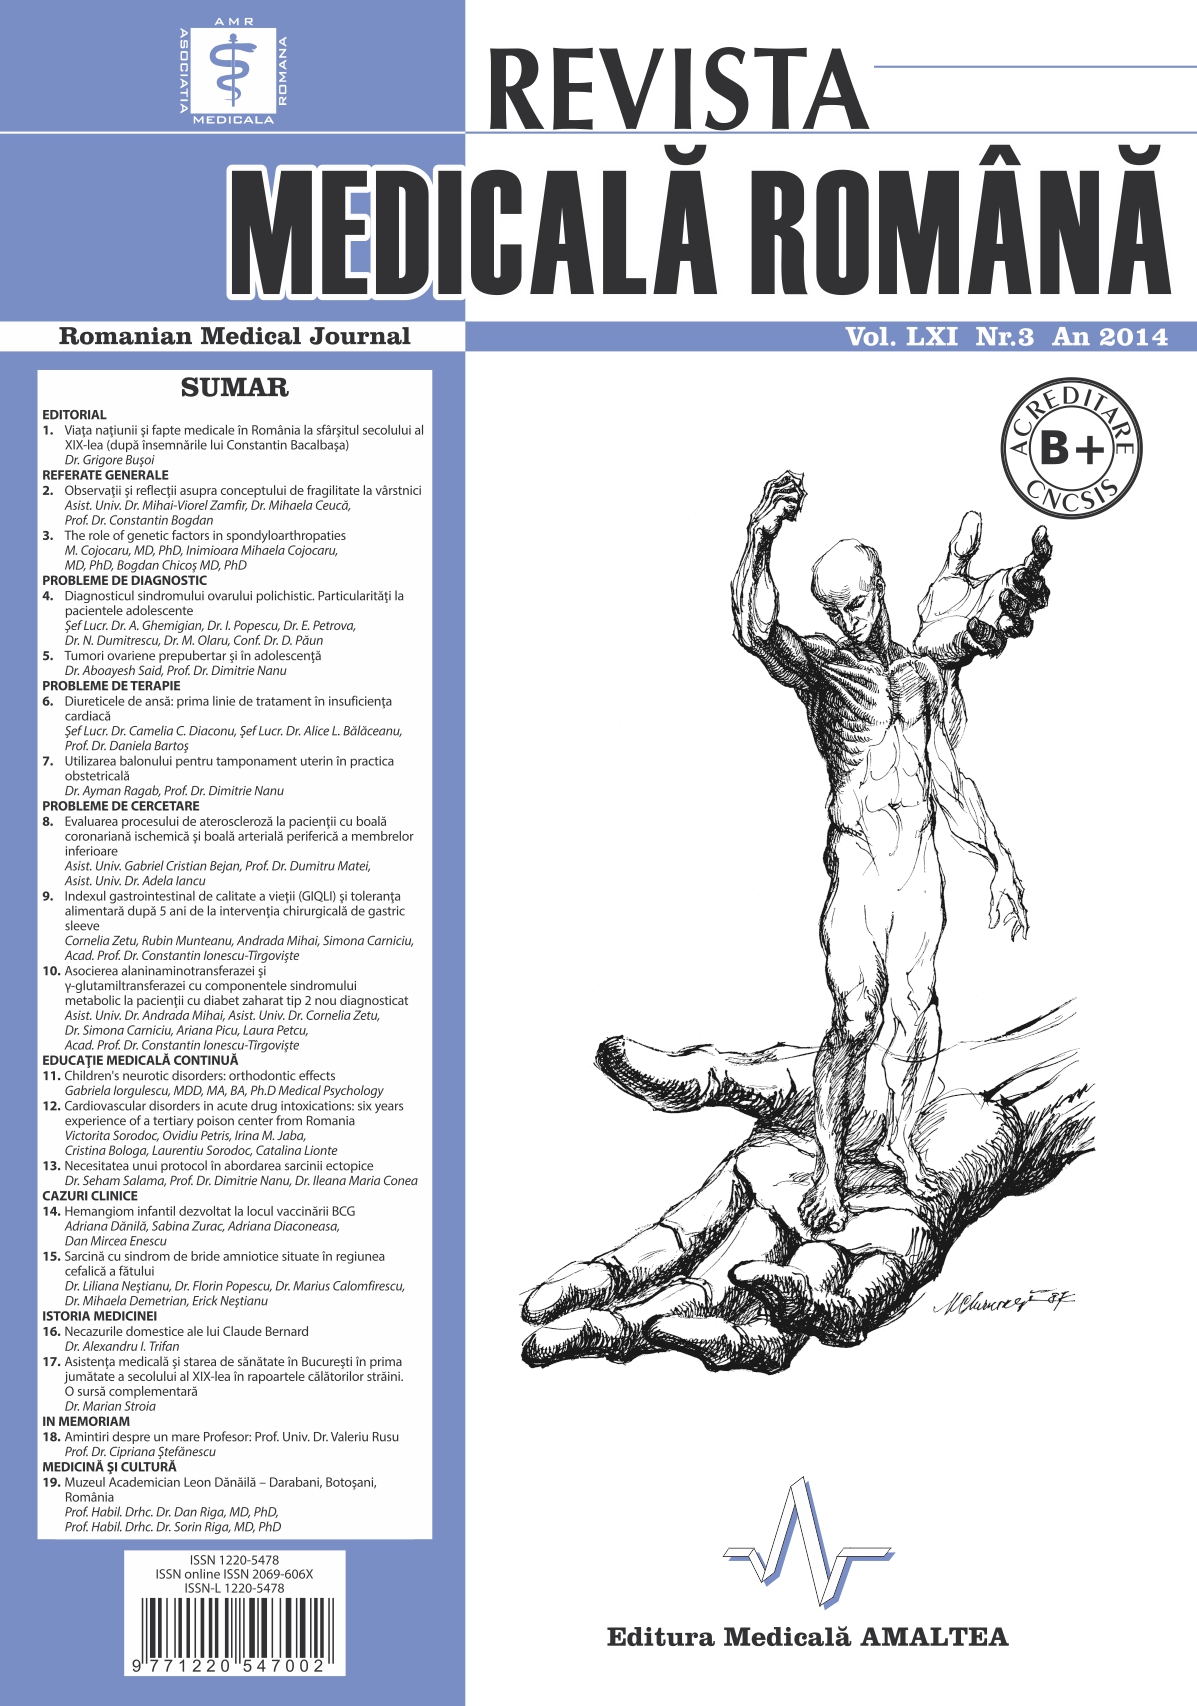 REVISTA MEDICALA ROMANA - Romanian Medical Journal, Vol. LXI, No. 3, Year 2014